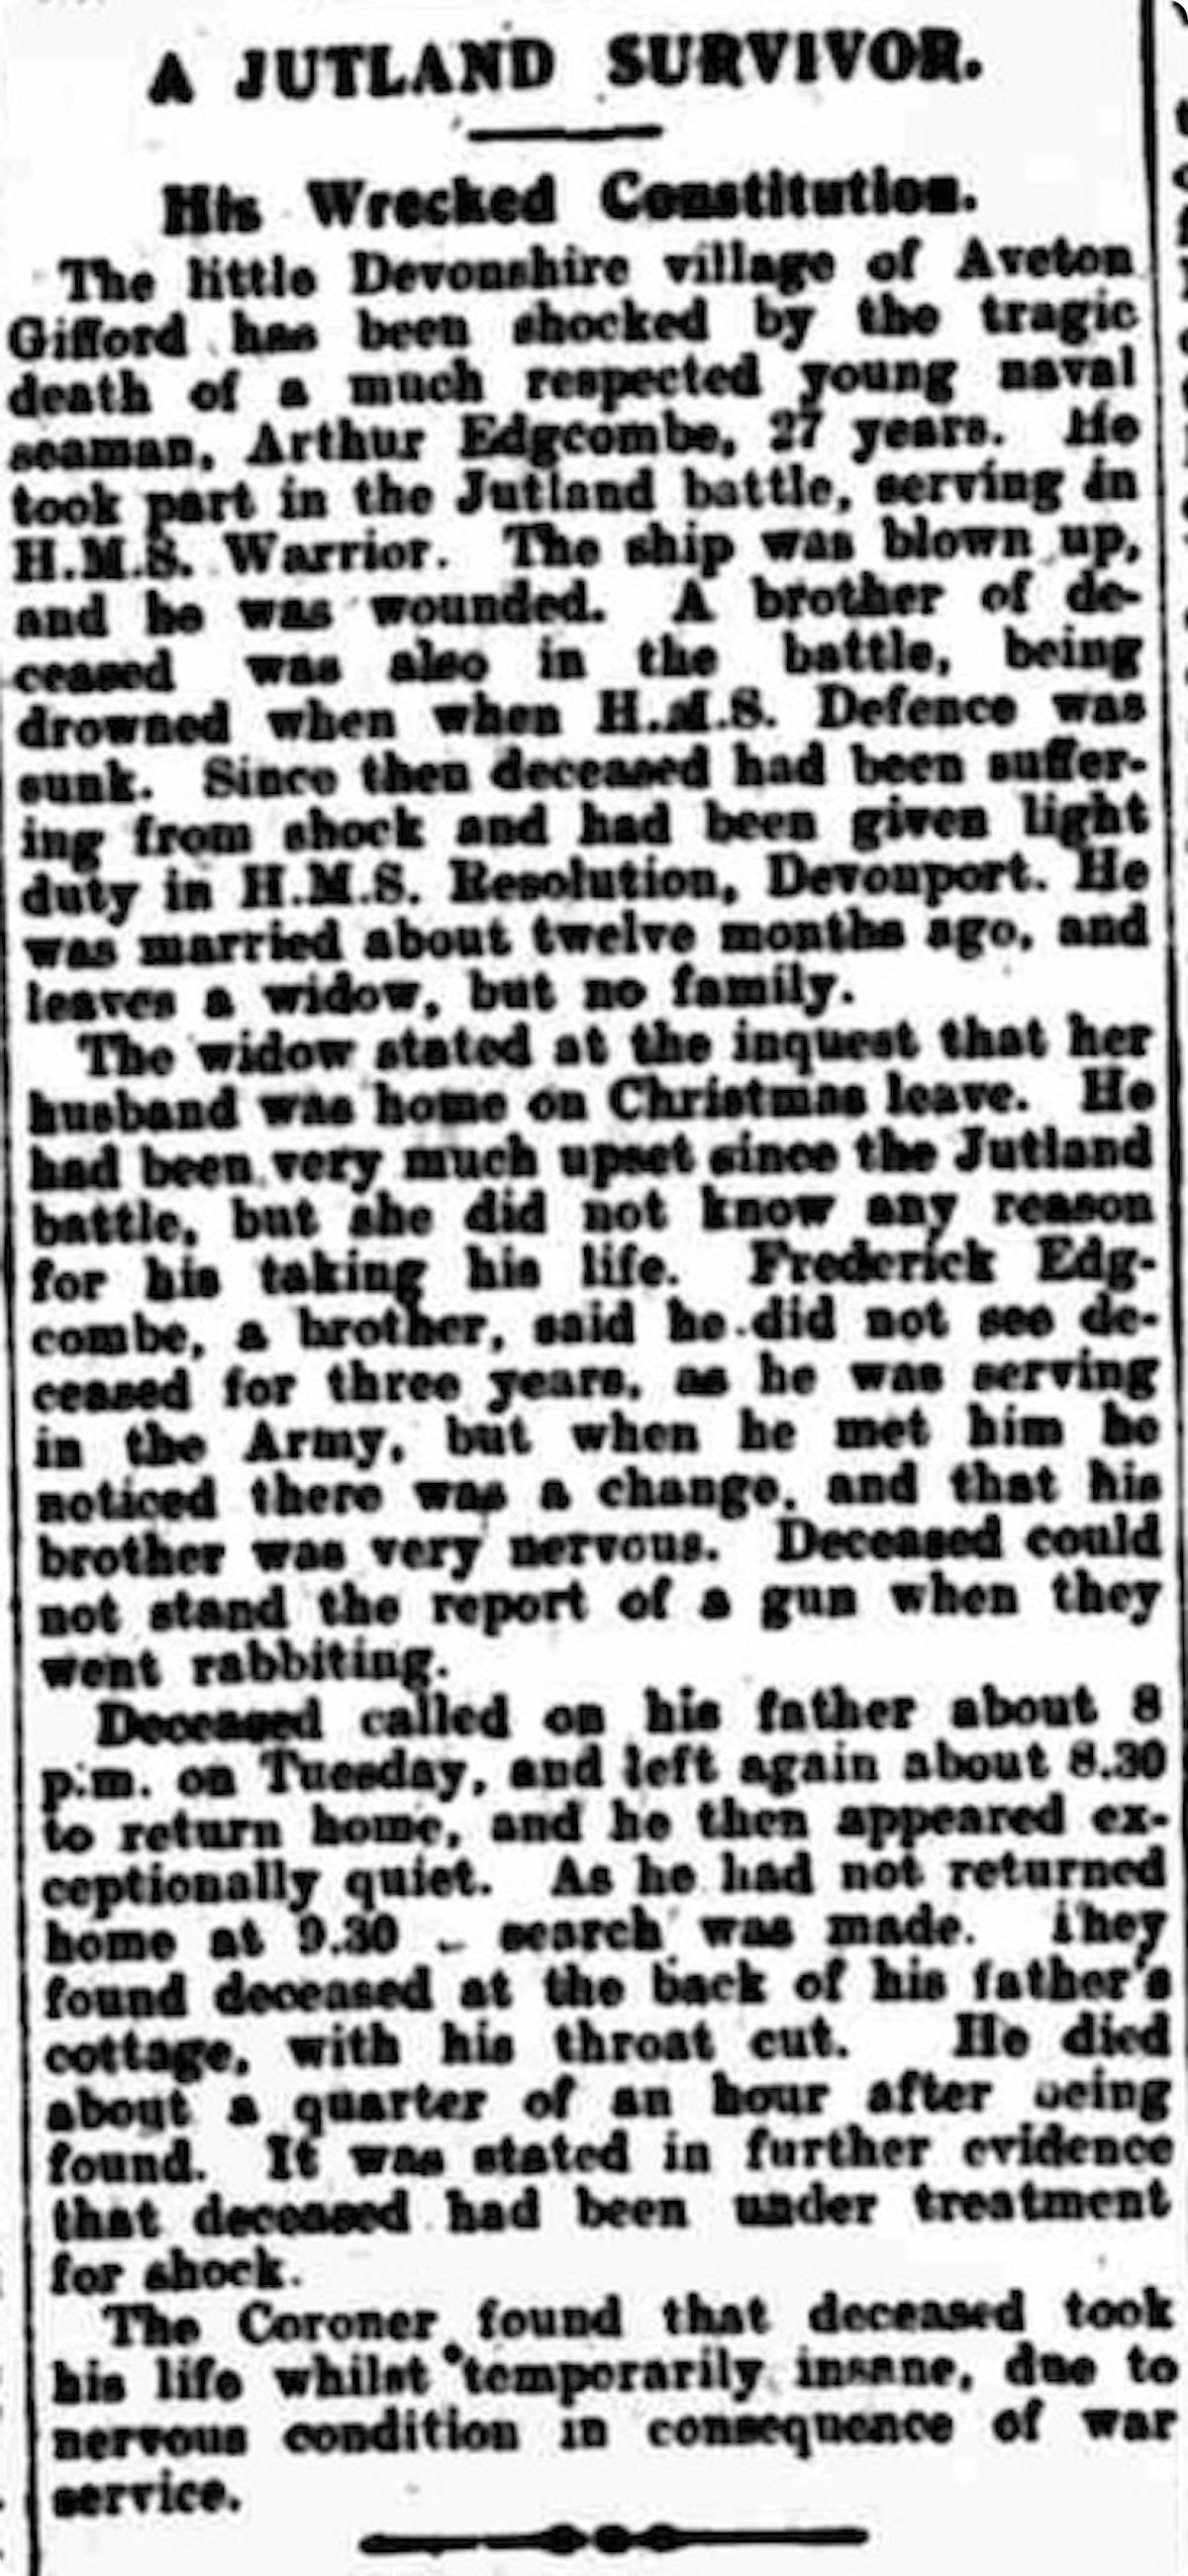 Hampshire Telegraph, 9 January 1920.